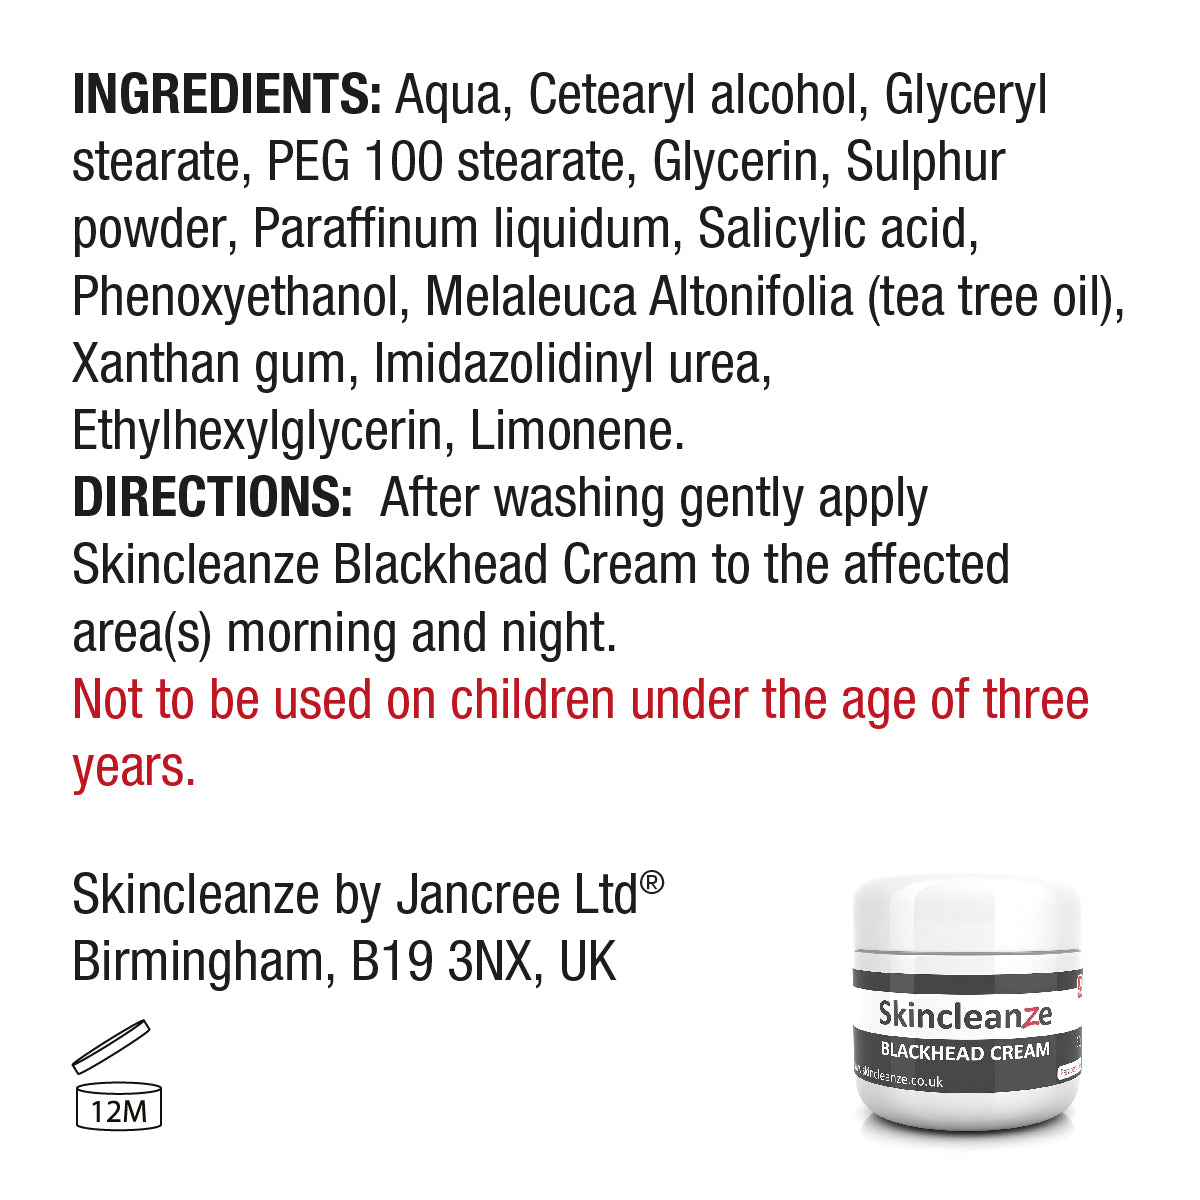 Skincleanze Blackhead Cream (Pack of 2x 50g)